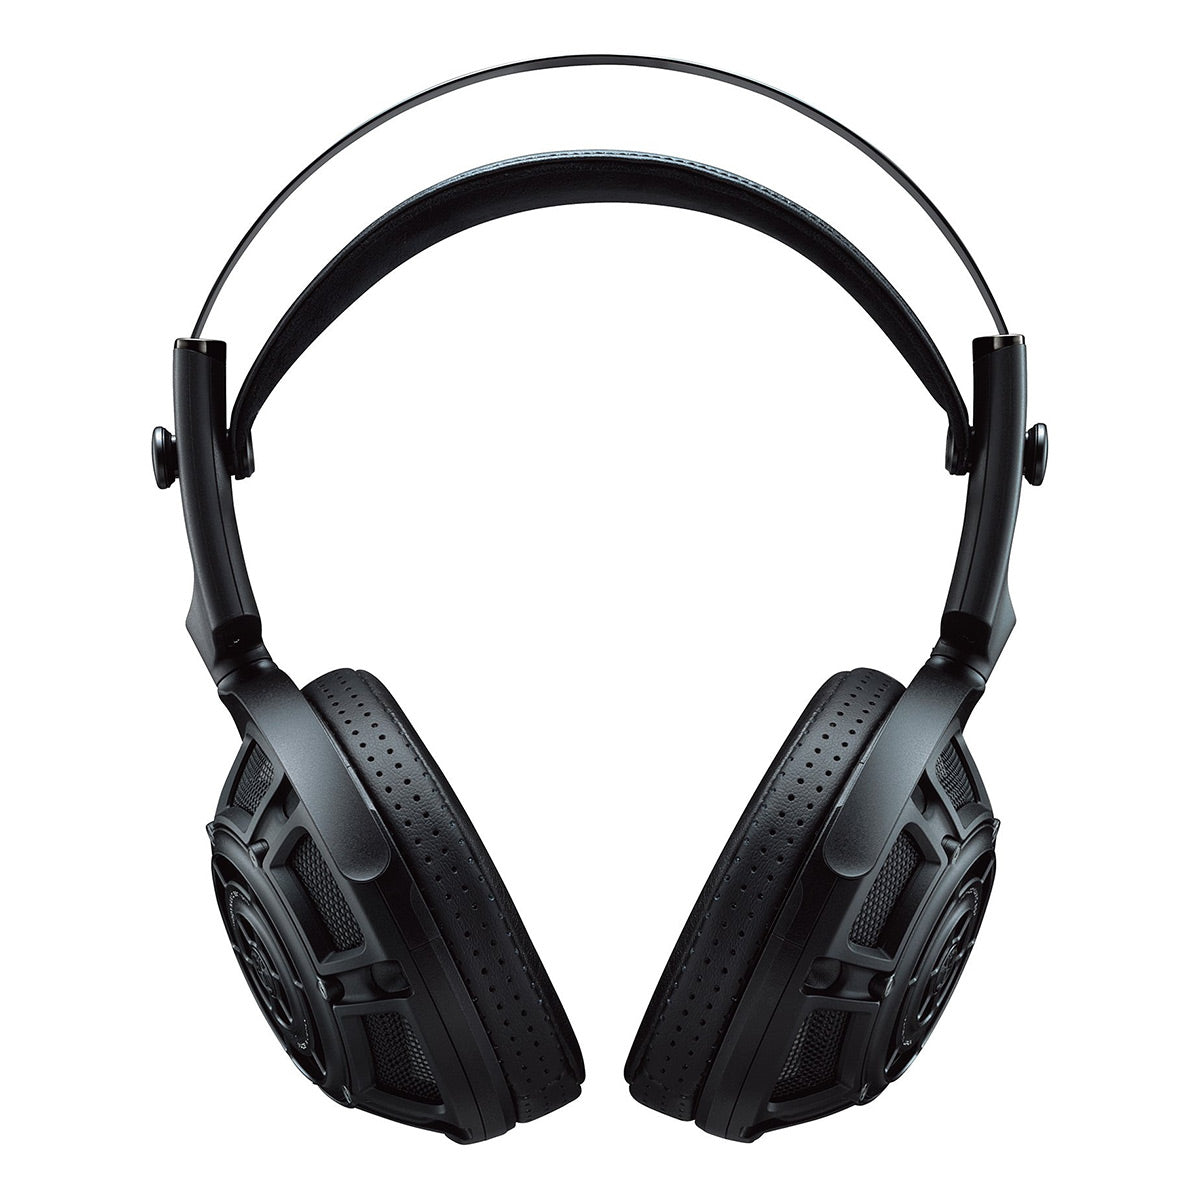 Yamaha YH-5000SE Over-Ear Headphones with Aluminum Headphone Stand